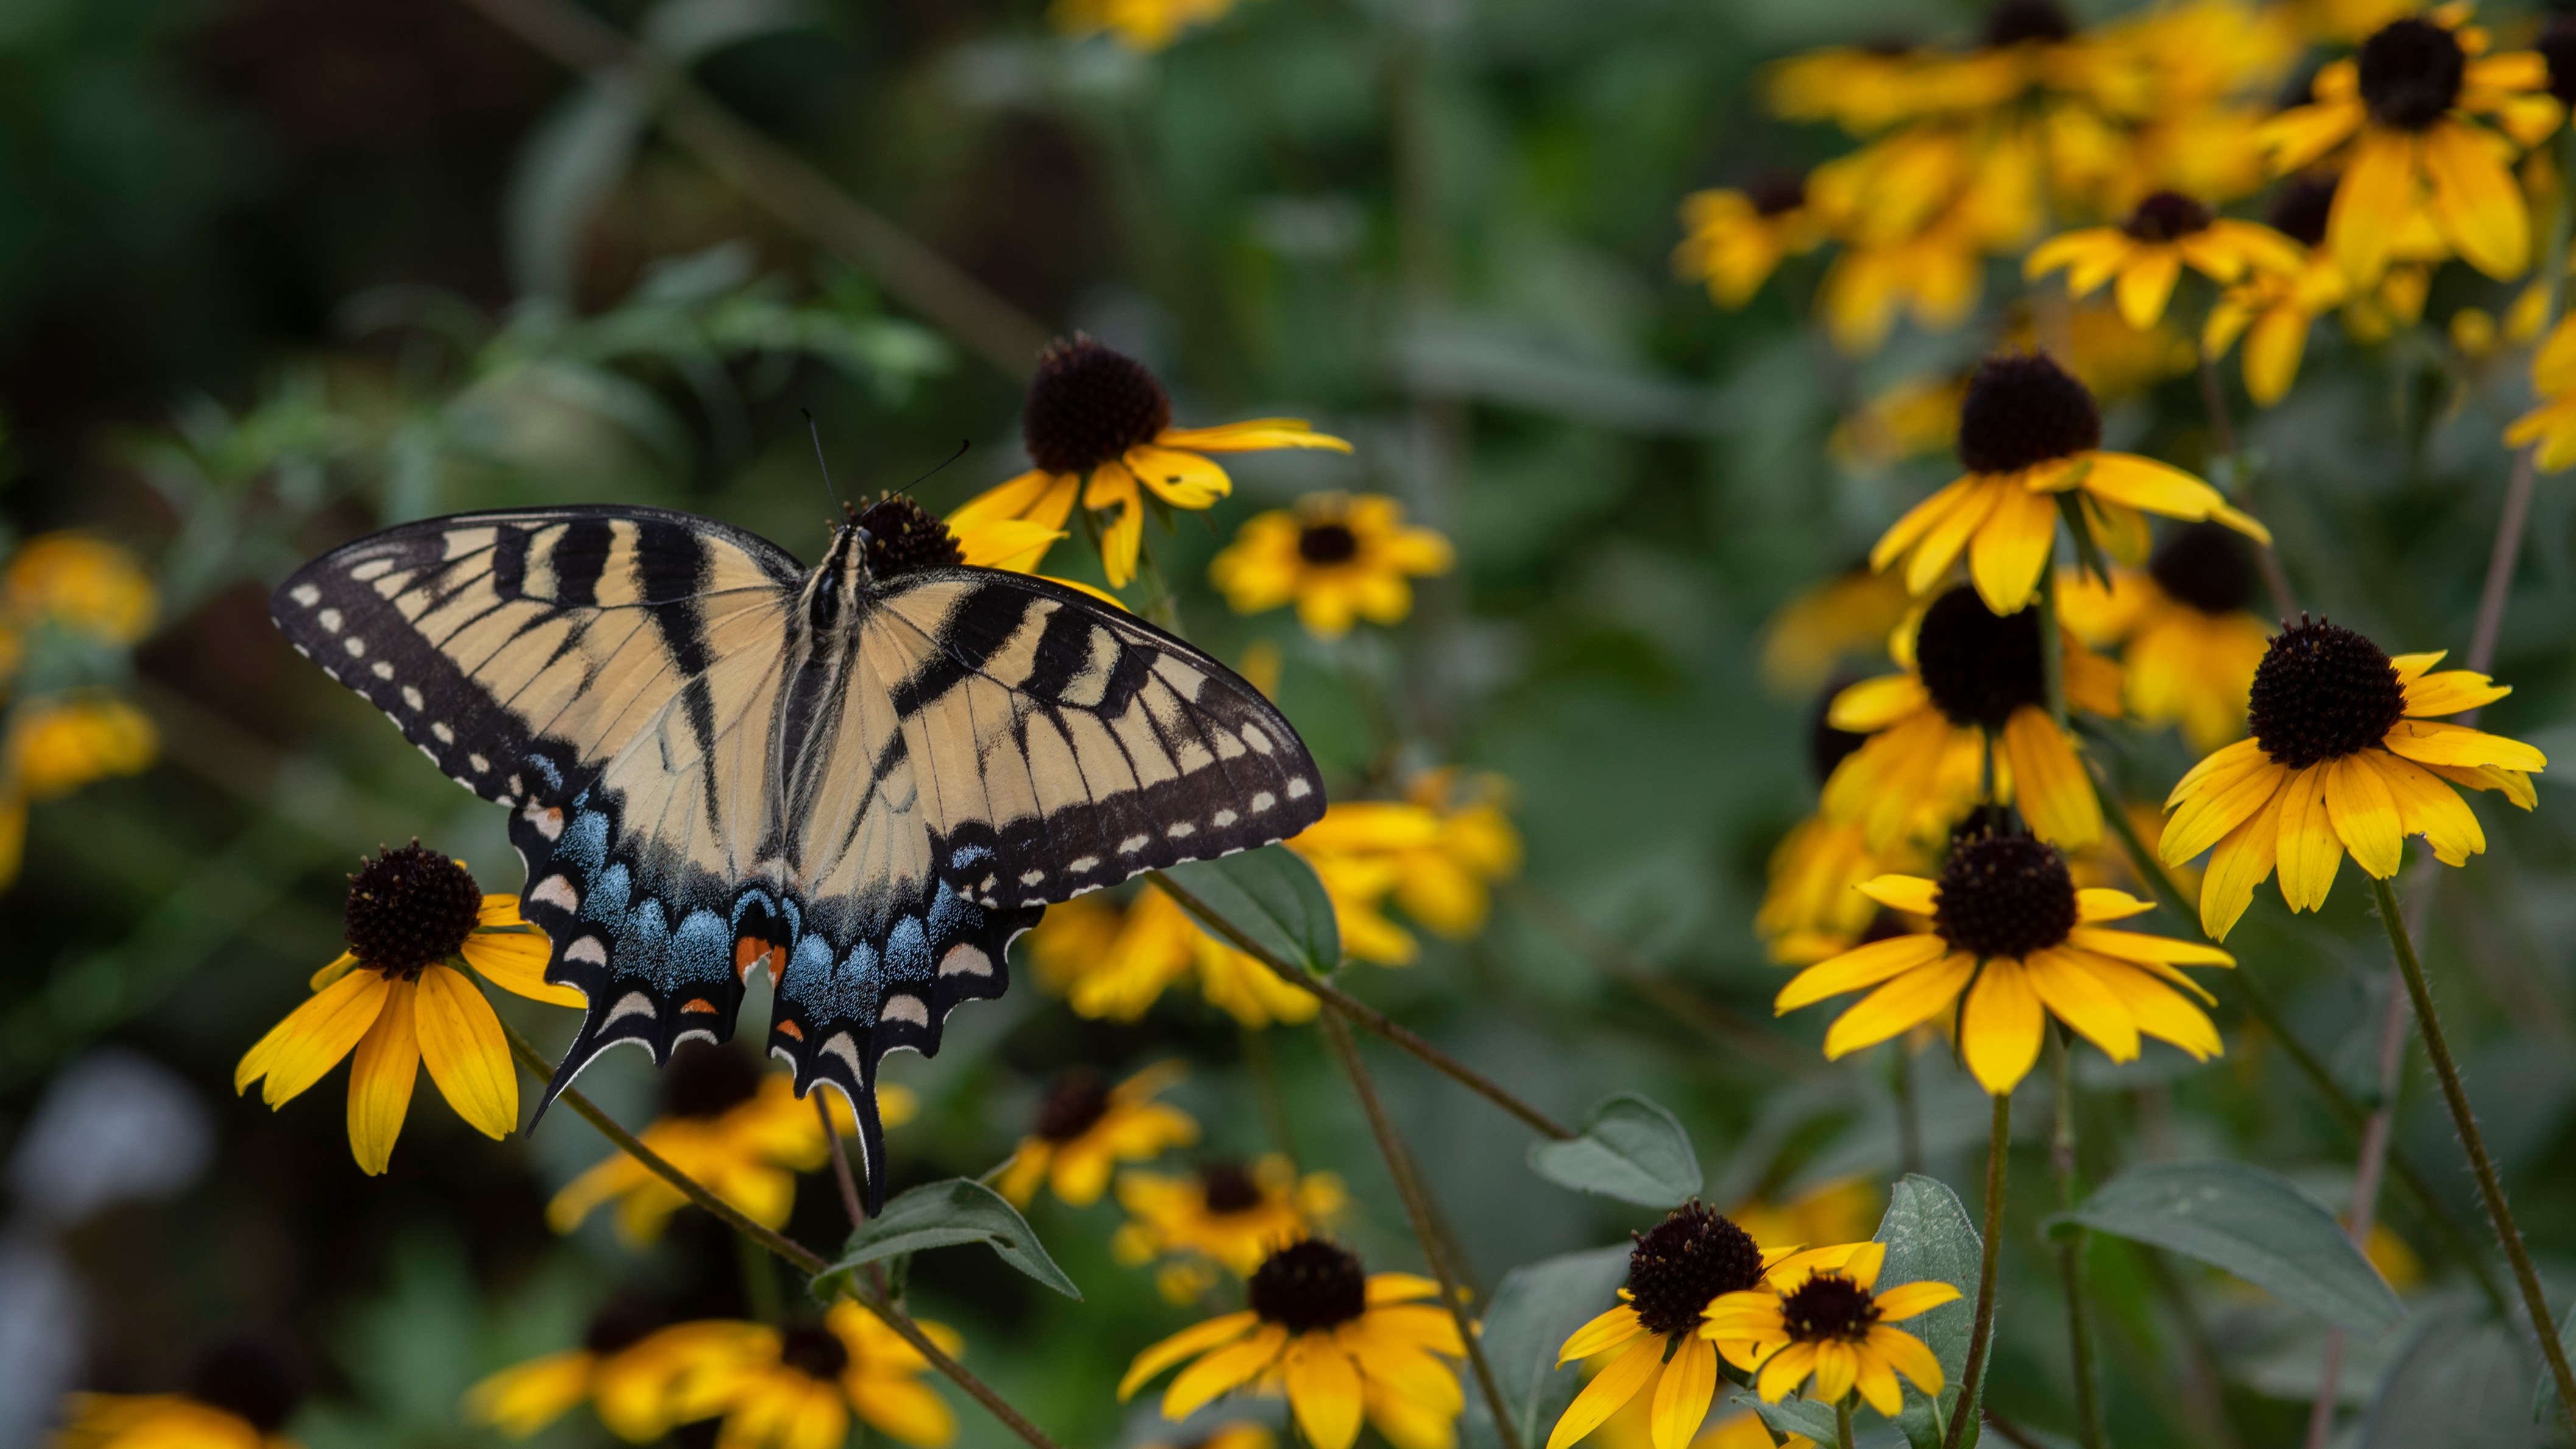 Tiger Swallowtail perusing the Black-eyed Susans